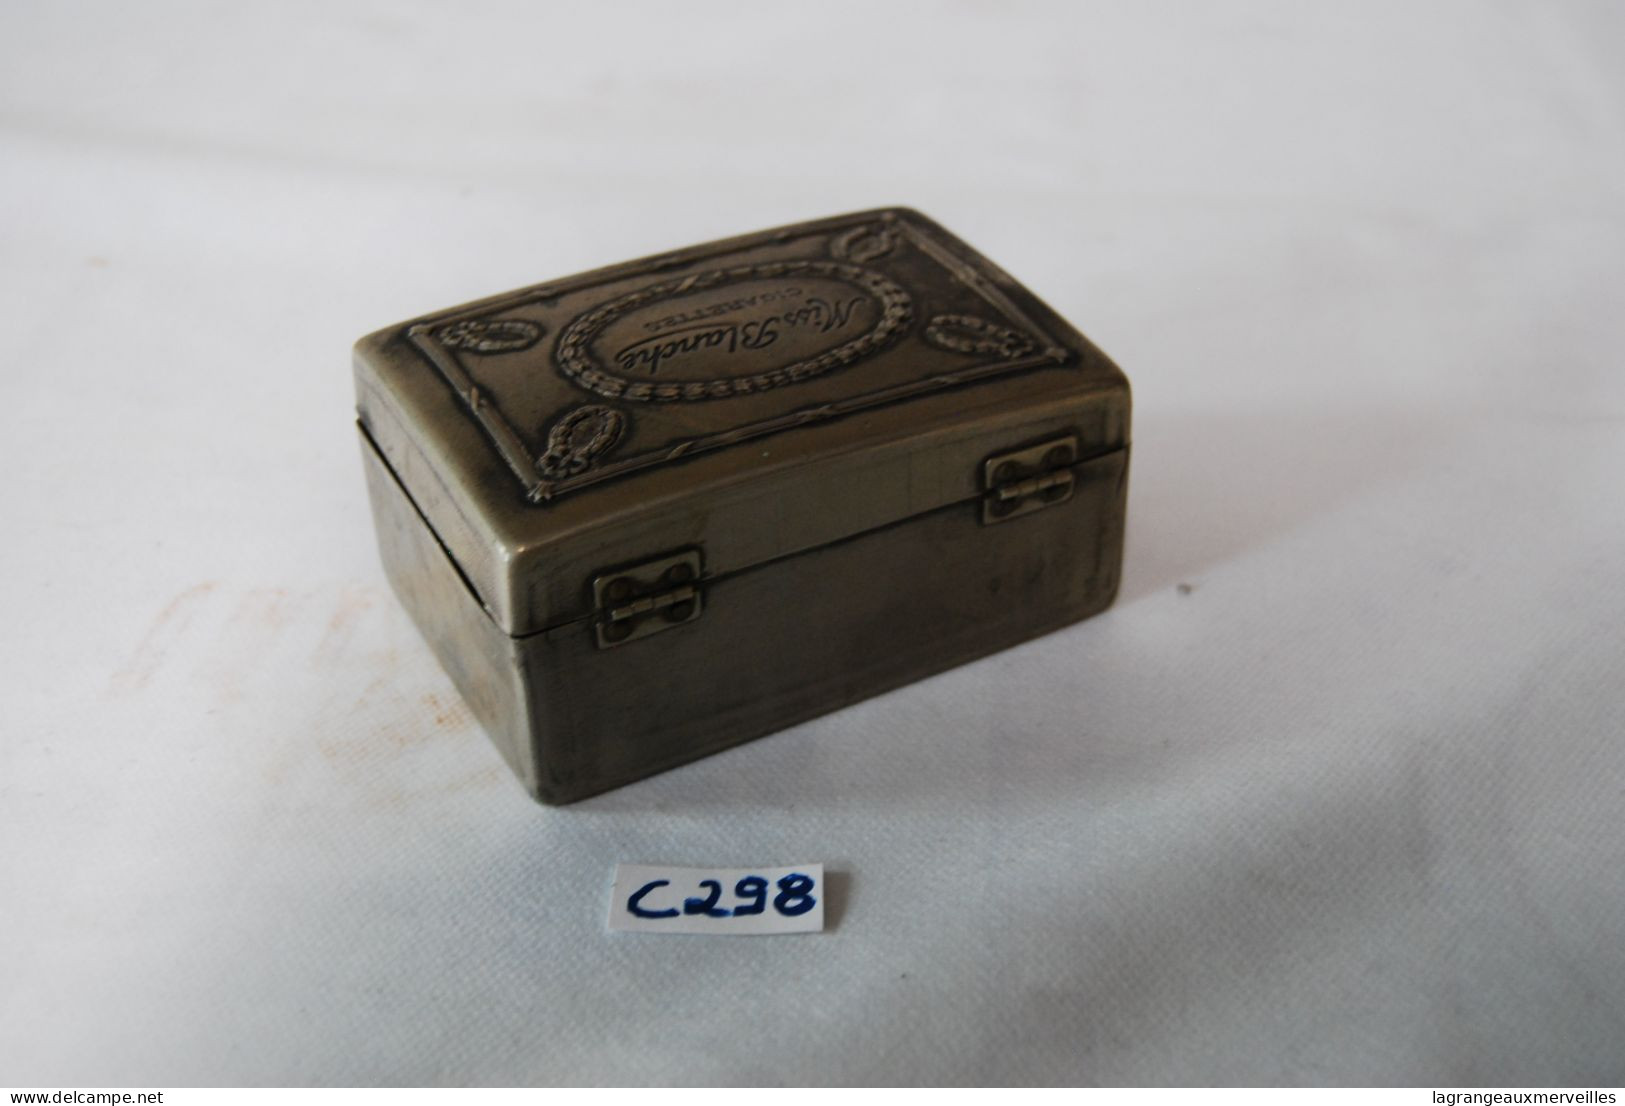 C298 Ancienne Boite à Tabac - Cigarettes Miss Blanche - Empty Tobacco Boxes